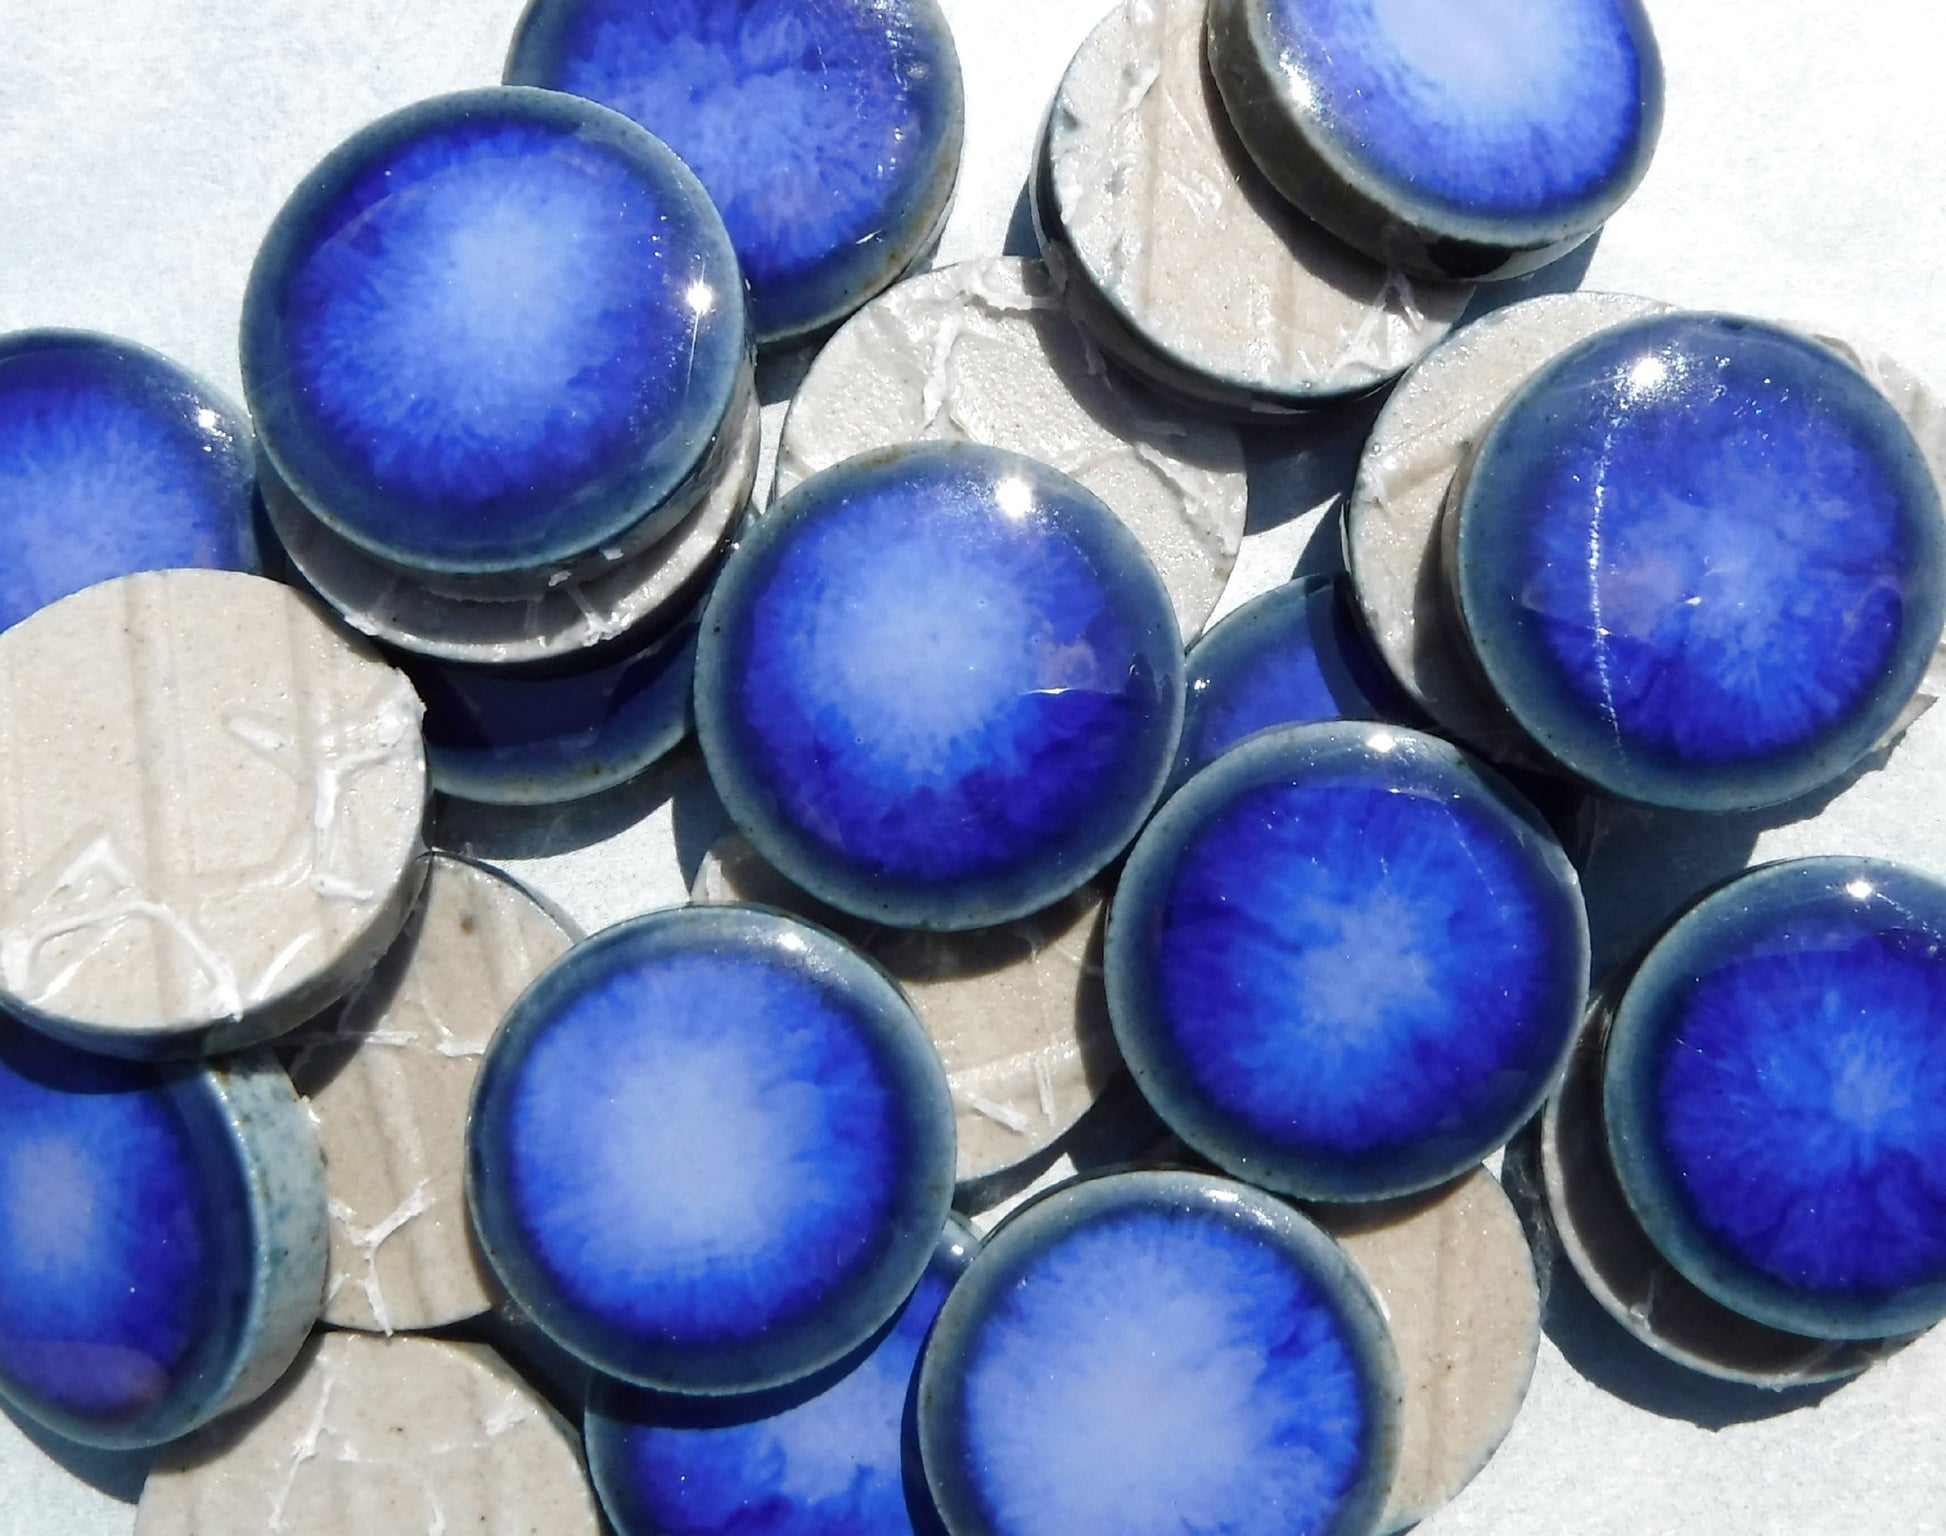 Stone Washed Blue Ceramic Tiles - 2 cm Penny Rounds Mosaic Tiles - 25 Tiles - Porcelain Circles